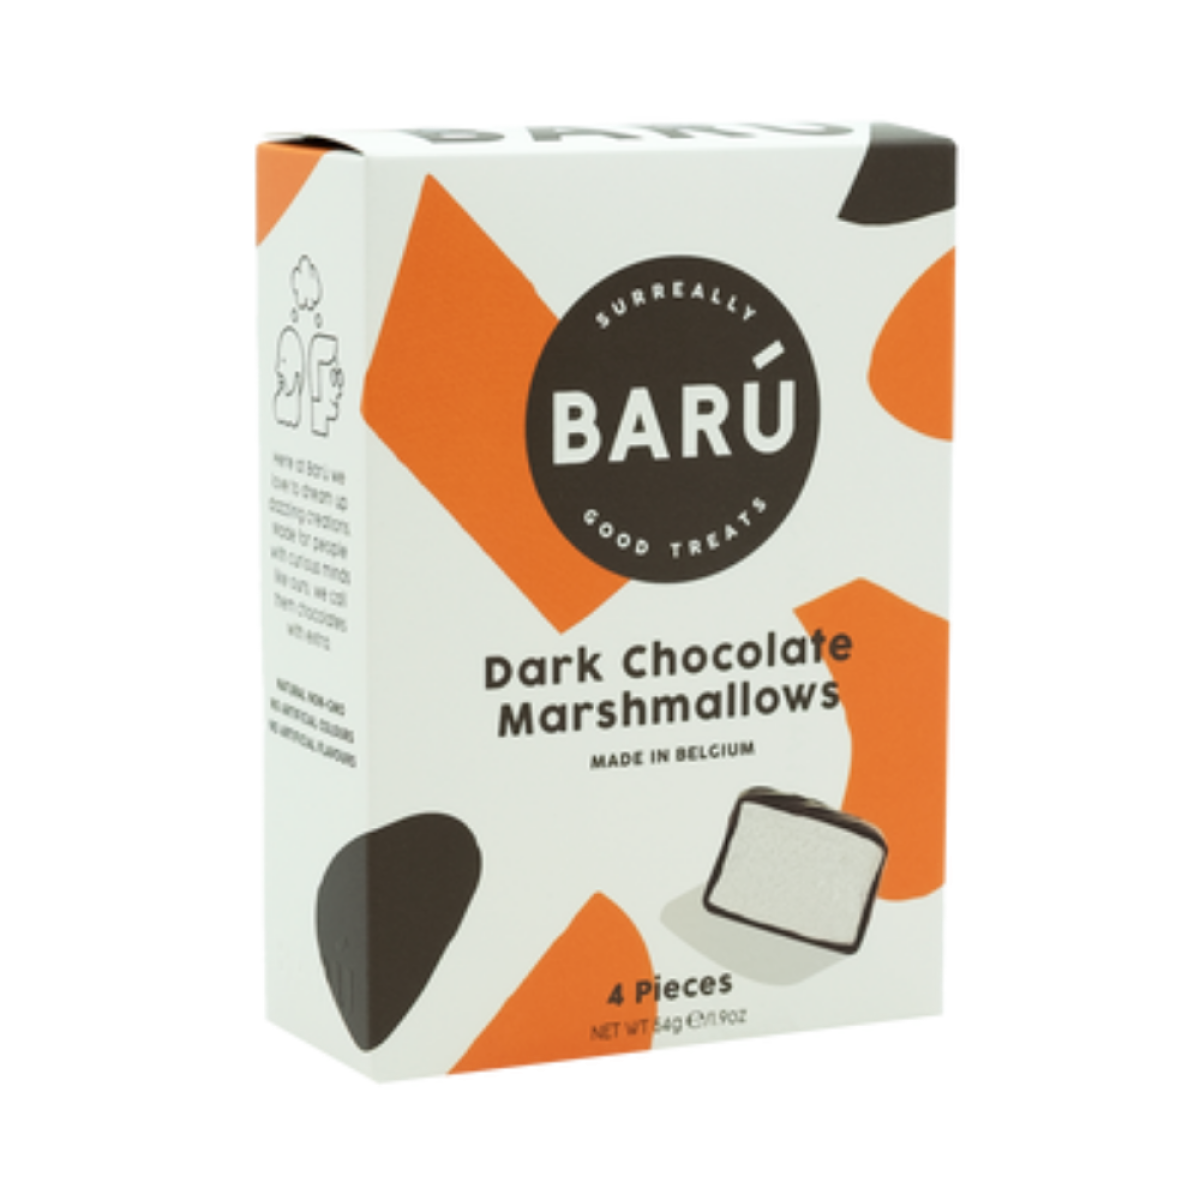 Dark chocolate Marshmallow 4pcs